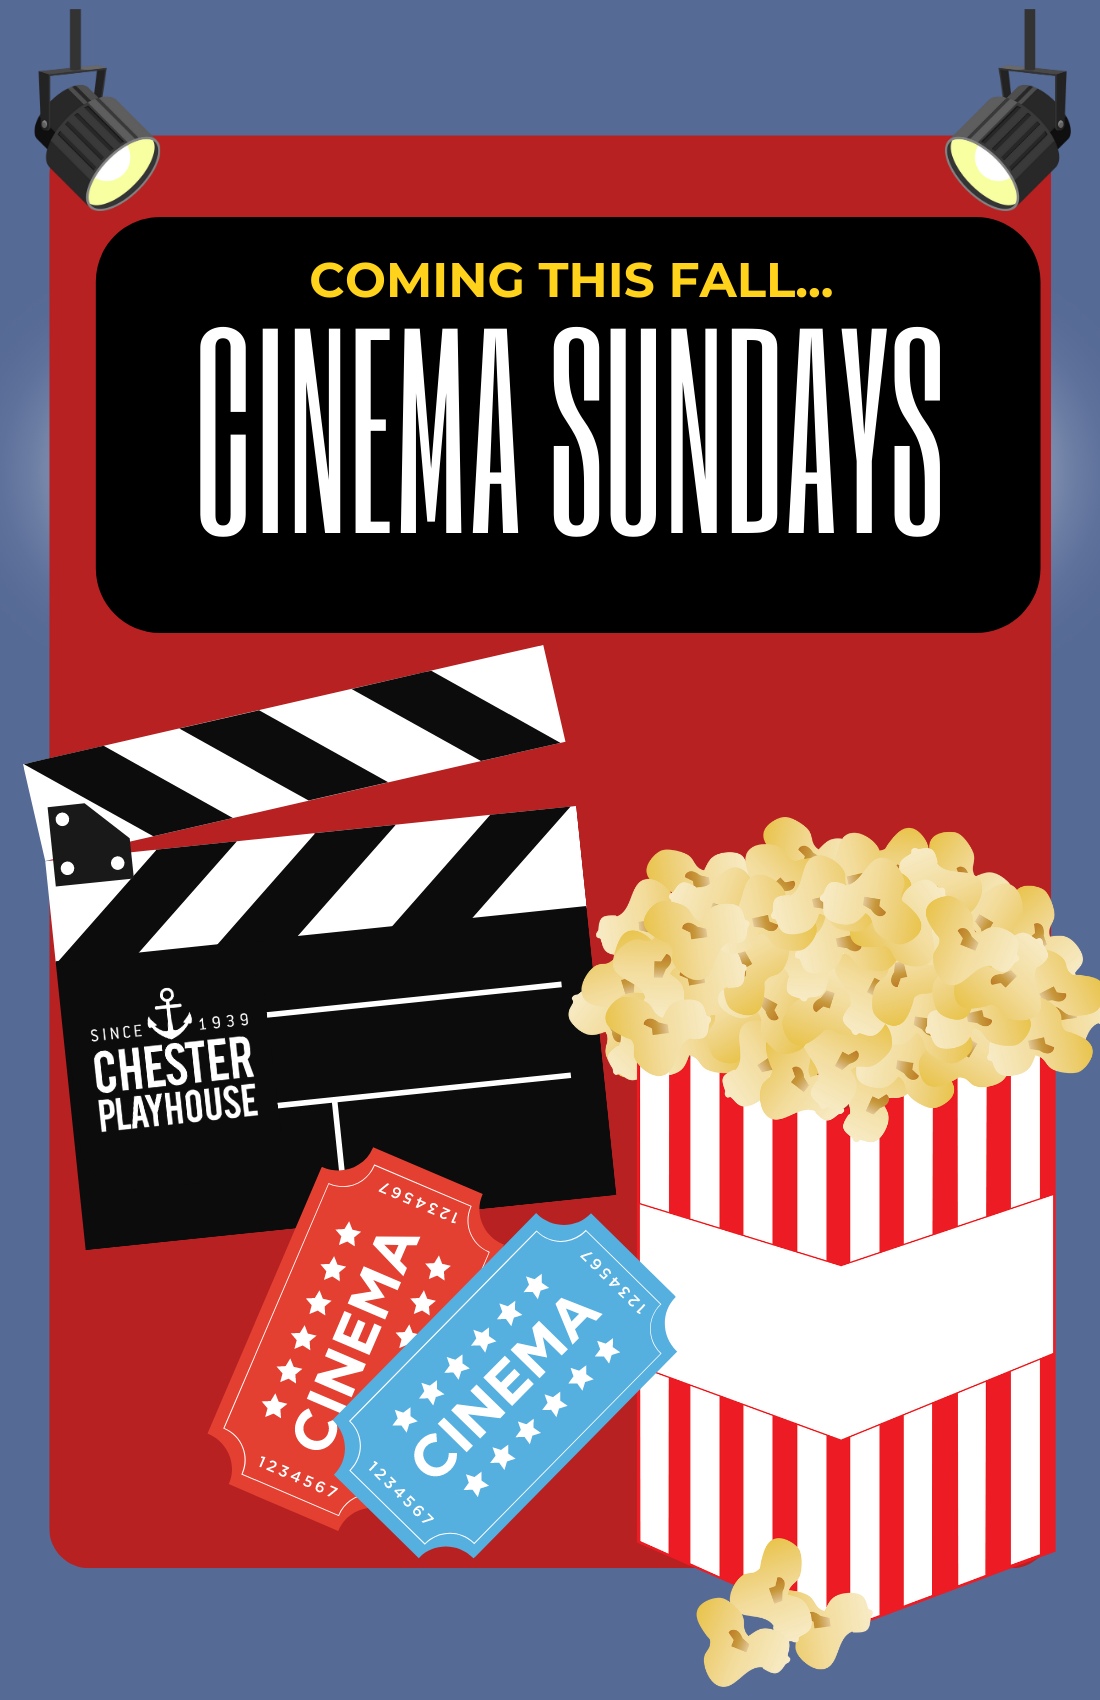 Cinema Sundays - coming soon!